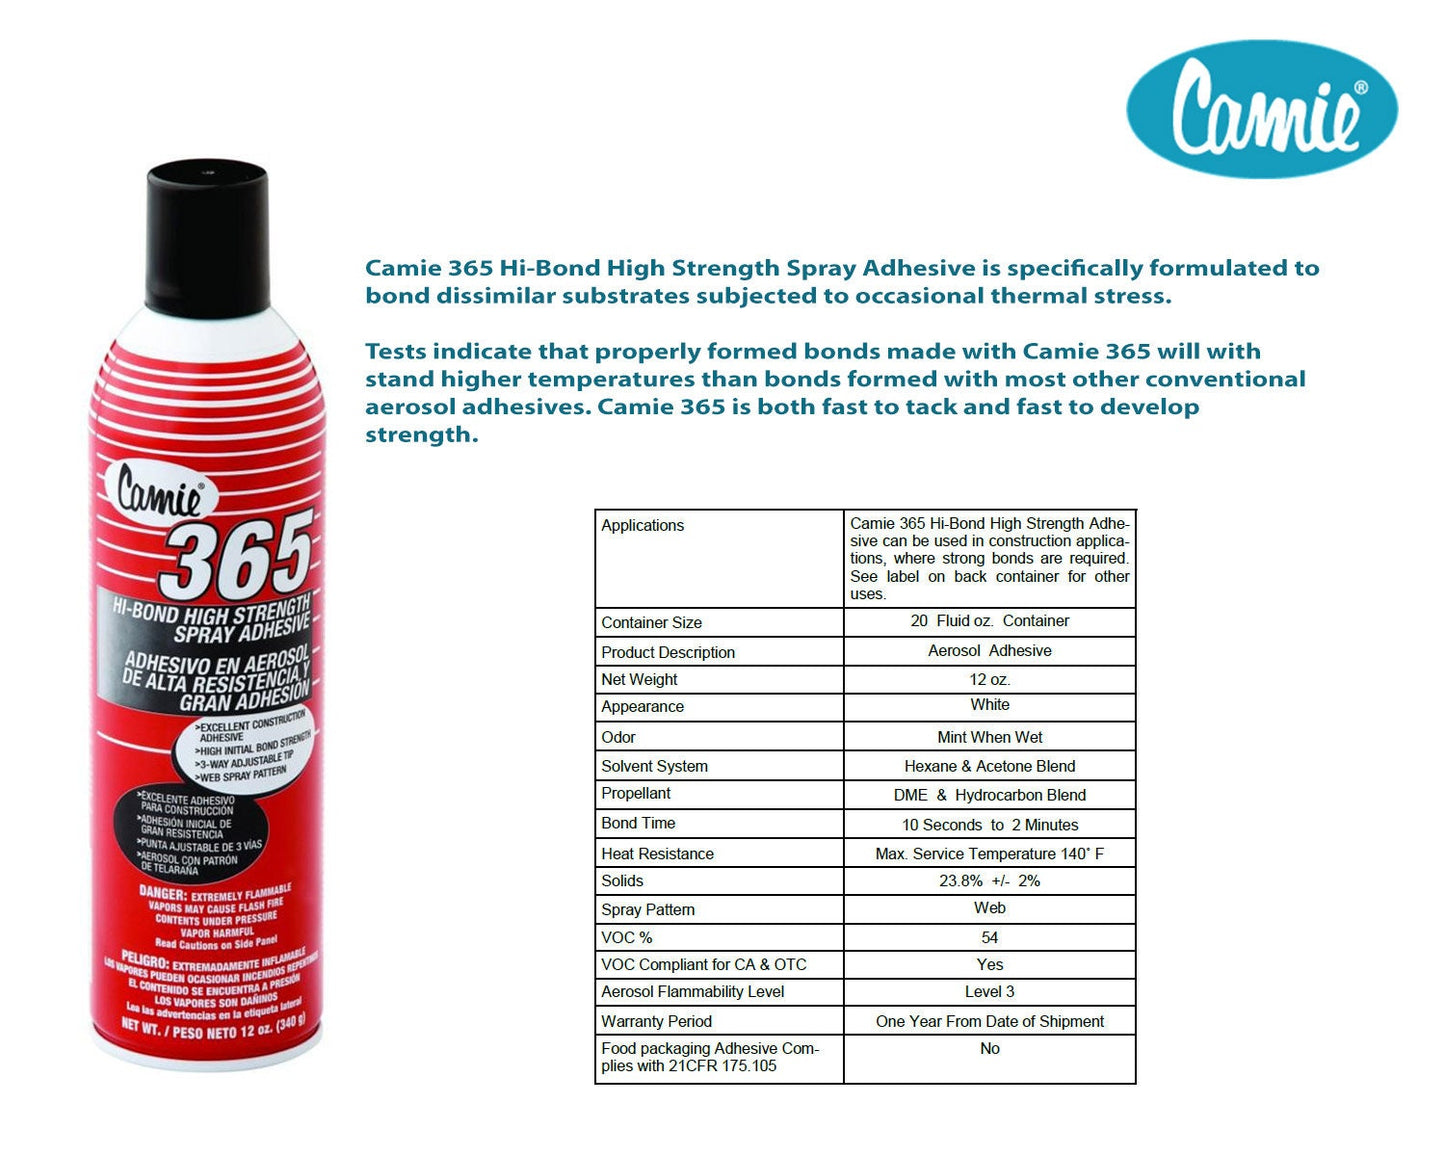 Camie 365 Hi-Bond High Strength Spray Adhesive - Made in USA